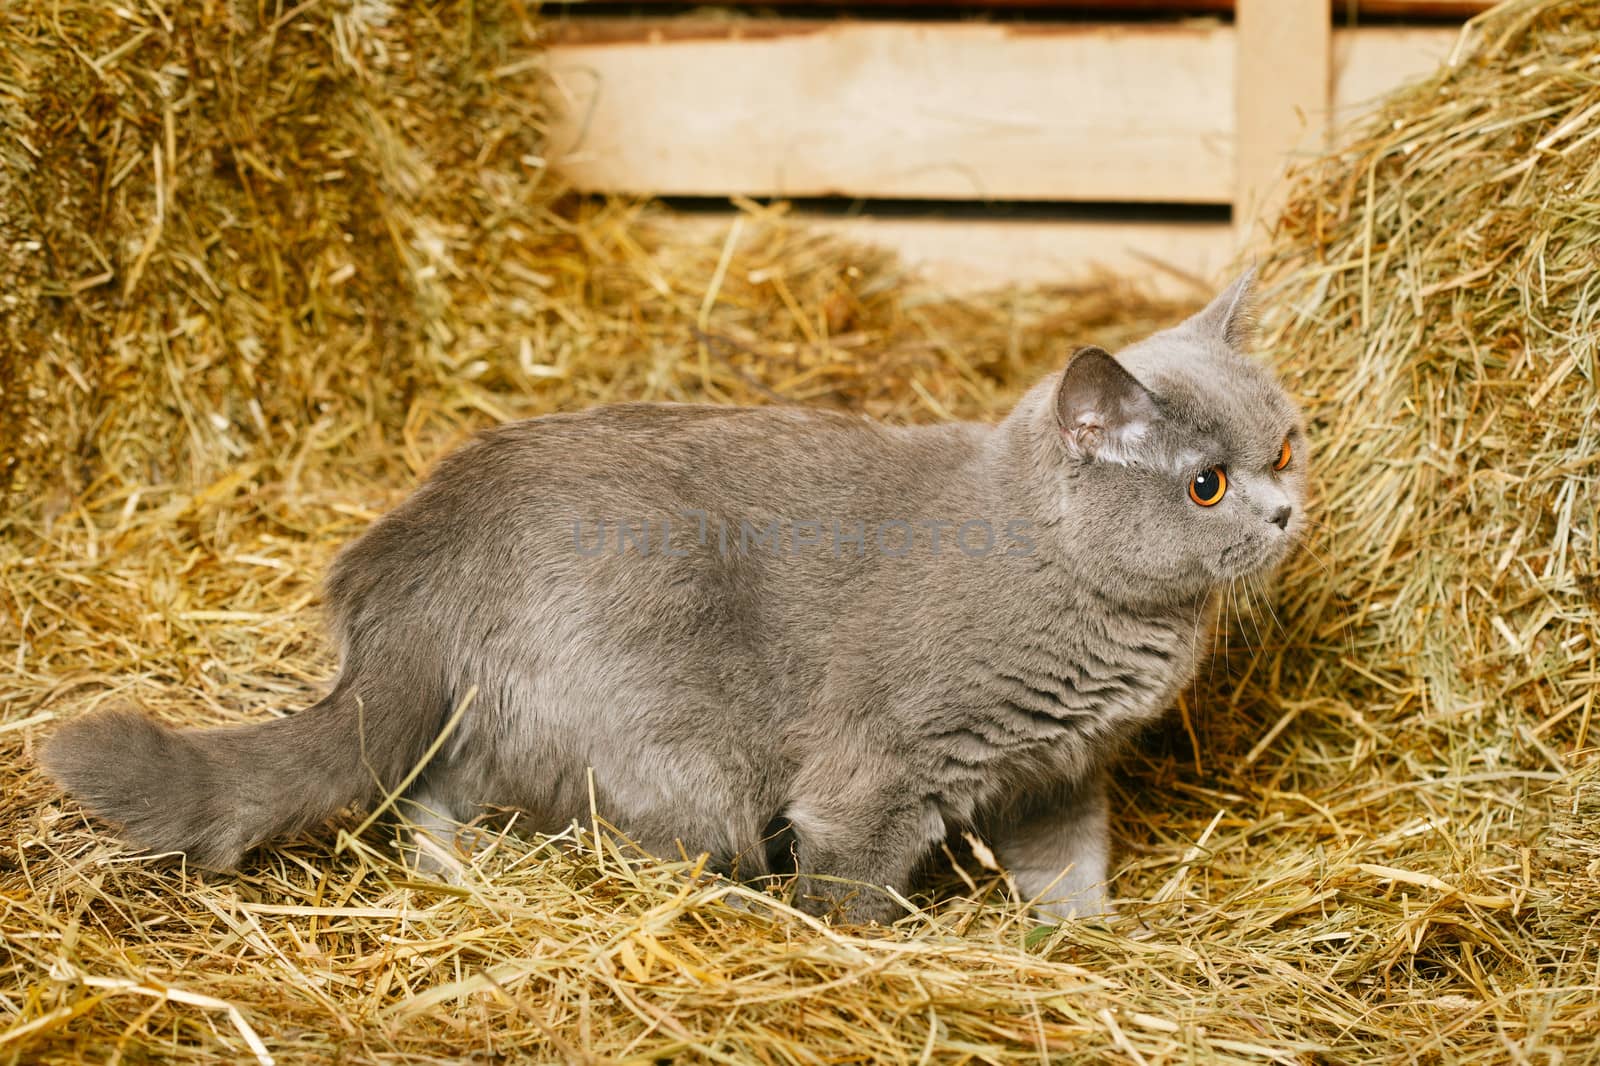 funny blue british shorthair cat on hayloft